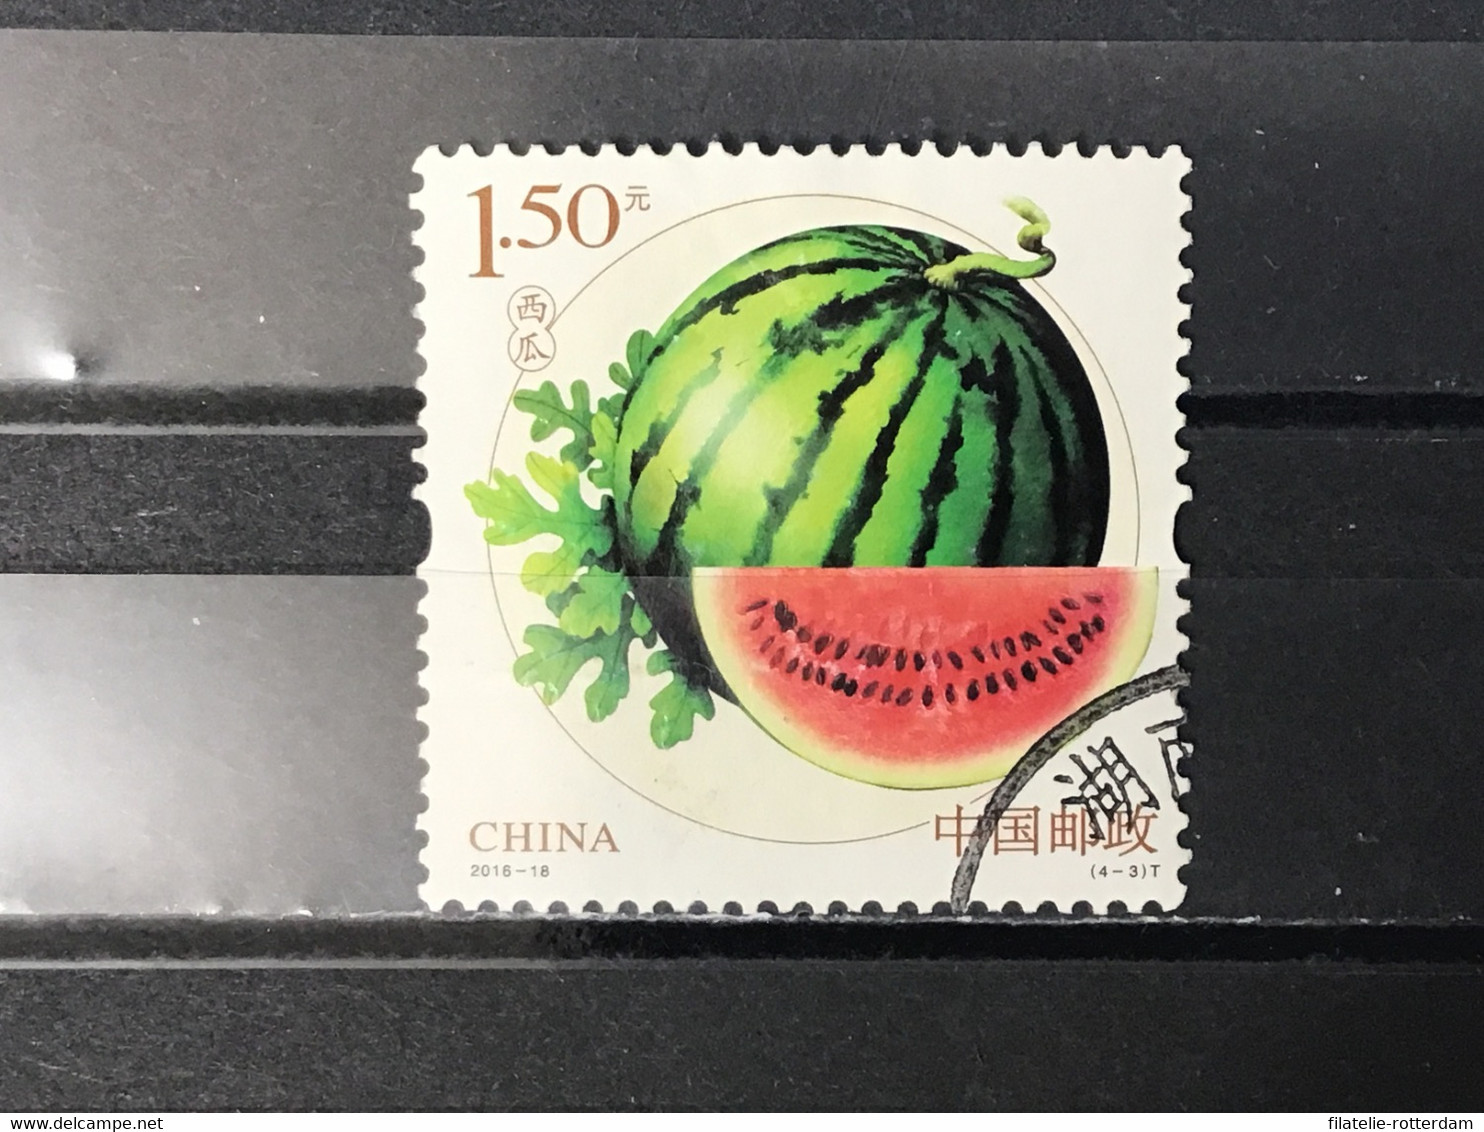 China - Vruchten (1.50) 2016 - Usados